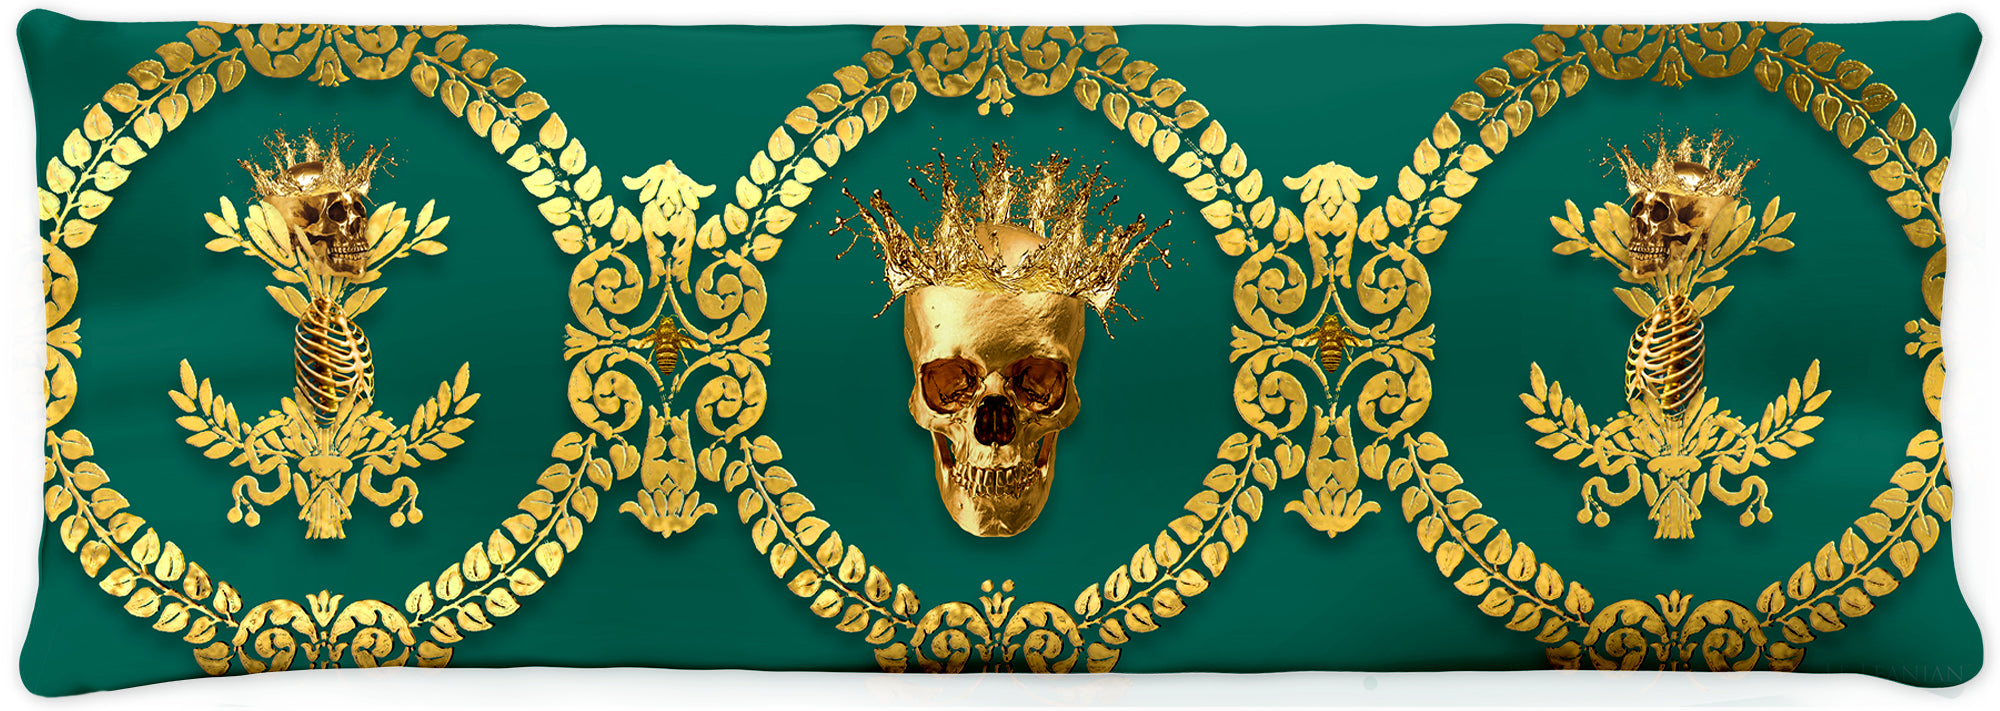 CROWN GOLD SKULL-GOLD RIBS-Body Pillow-PILLOW CASE- color JADE, GREEN, BLUE GREEN